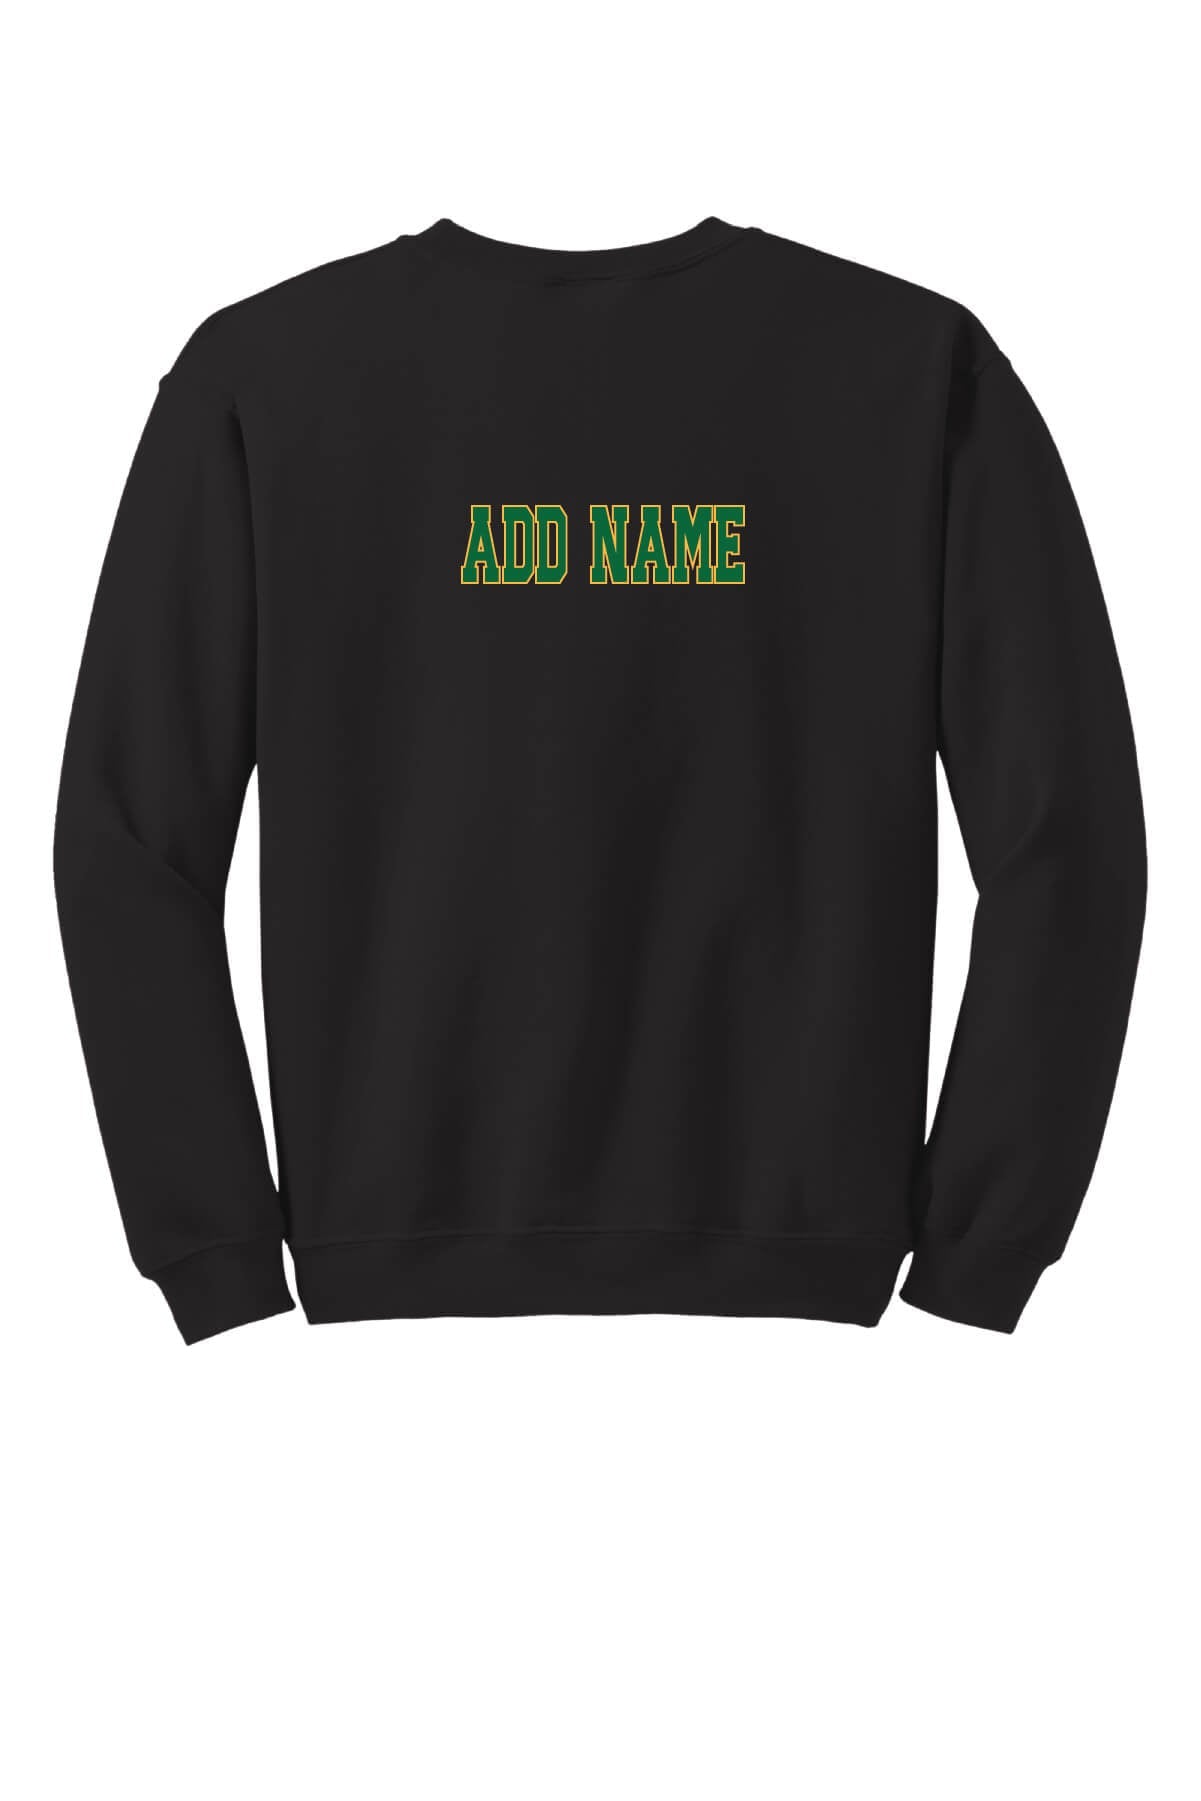 Notre Dame Spartans Crewneck Sweatshirt back-black